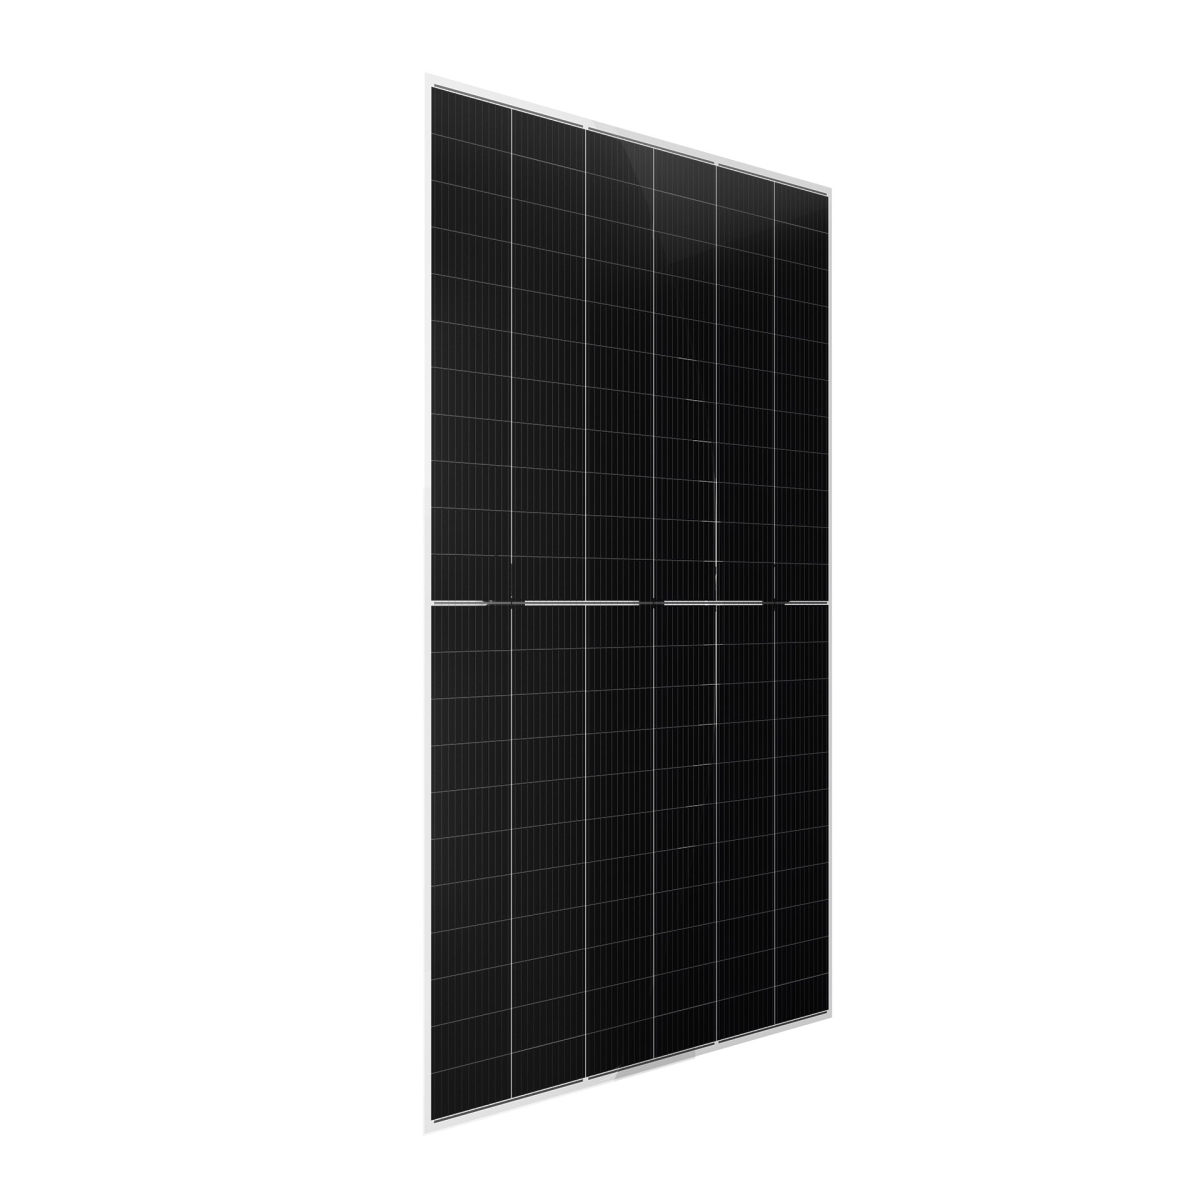 CW Enerji 675Wp M12 132PM Cell Bifacial G2G Half-Cut MB Solar Panel